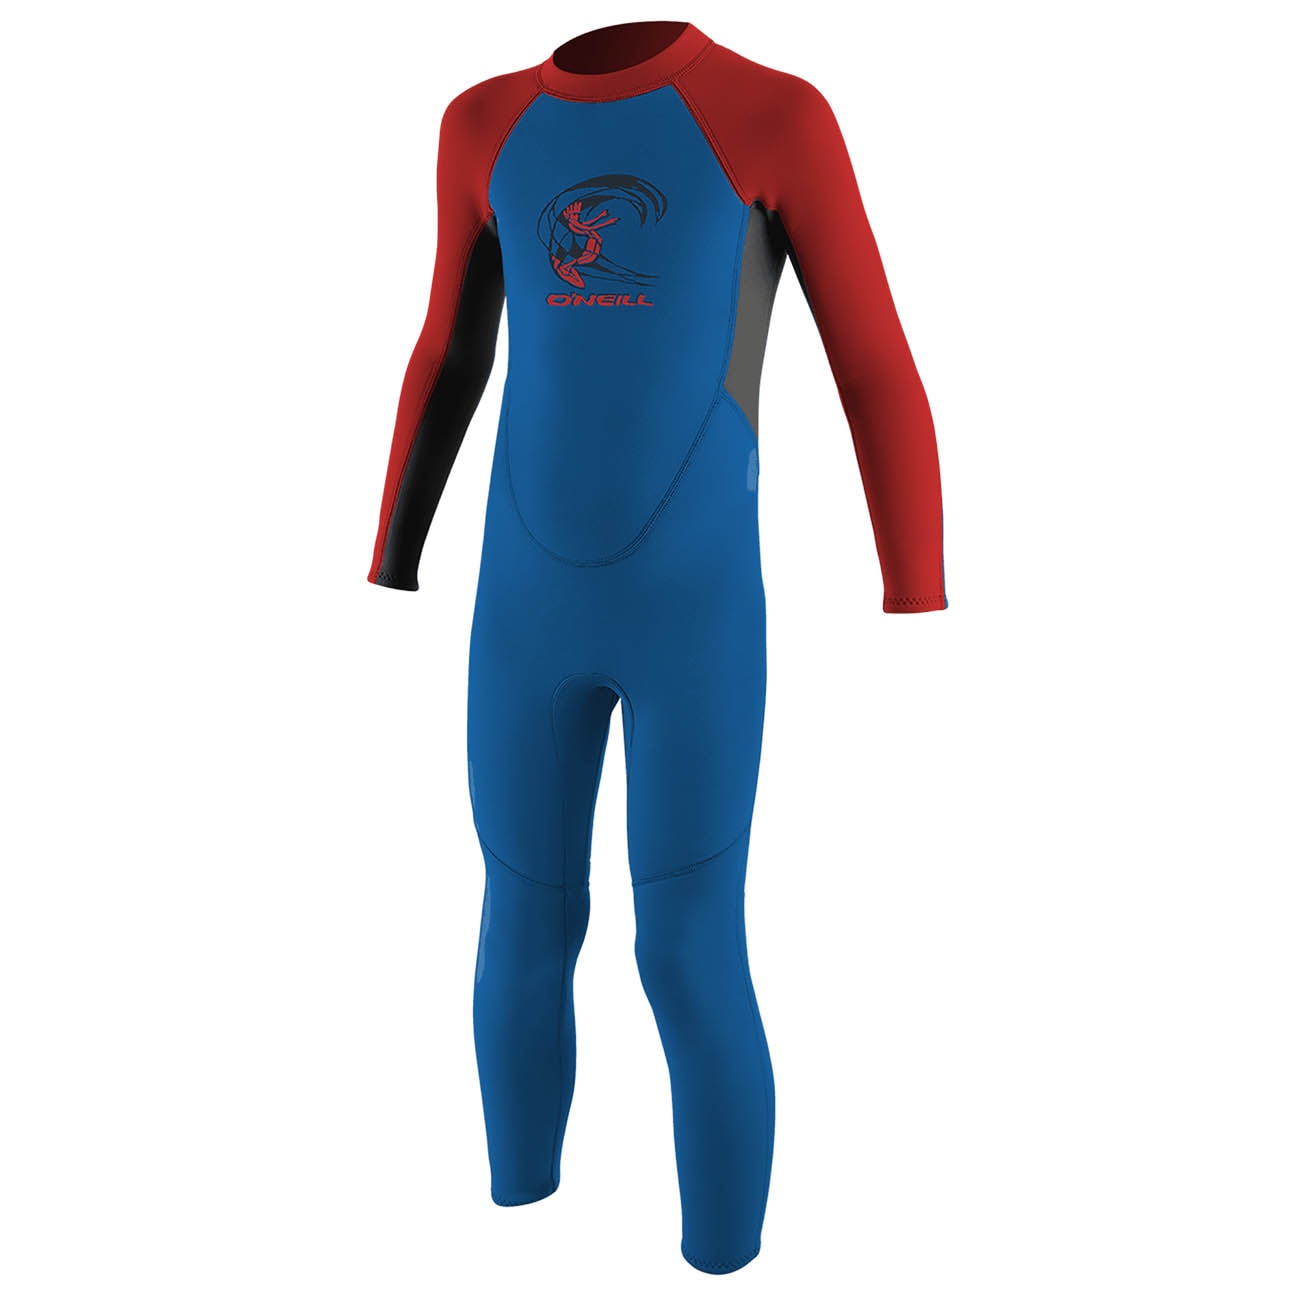 ONEILL Toddler Reactor-2 2mm Back Zip Short Sleeve Spring Wetsuit 6 Ocean/Graphite/Red